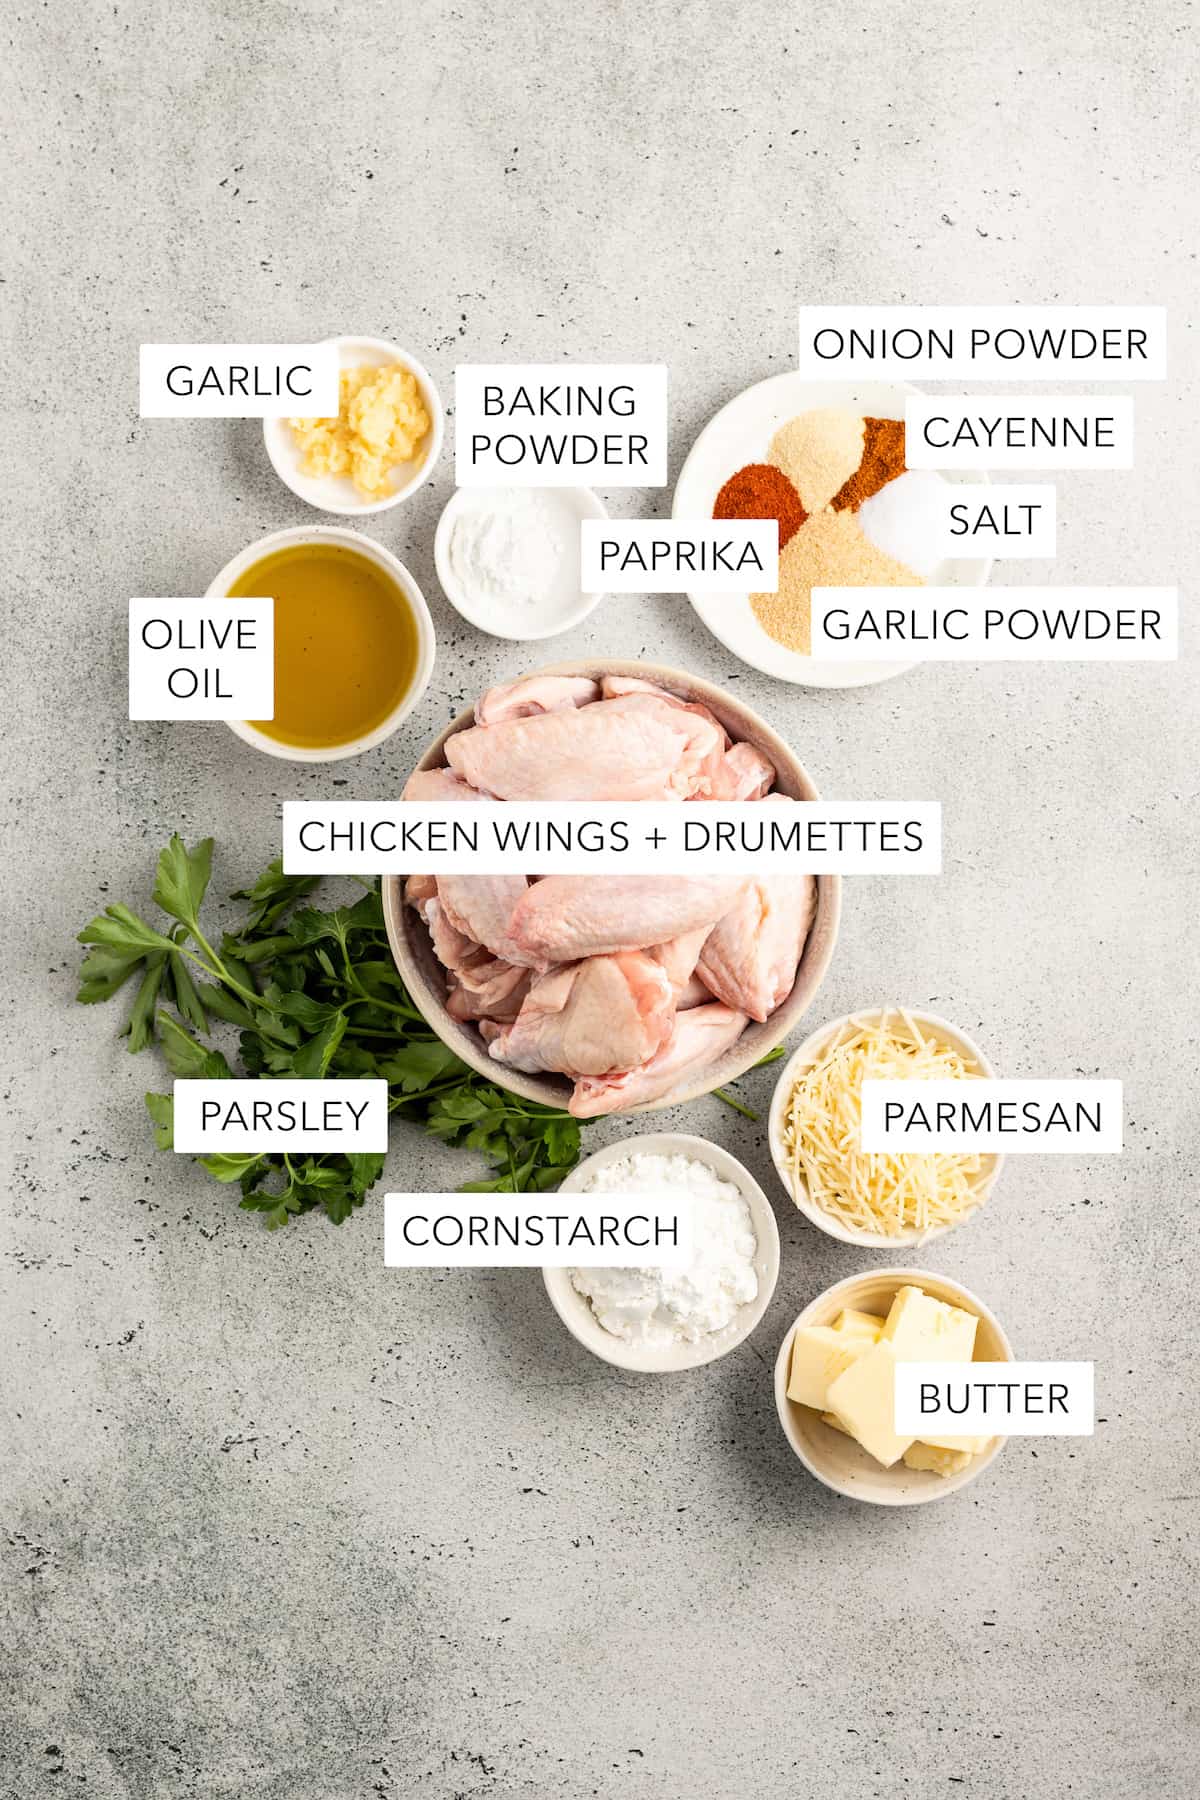 Ingredients for garlic parmesan chicken wings.